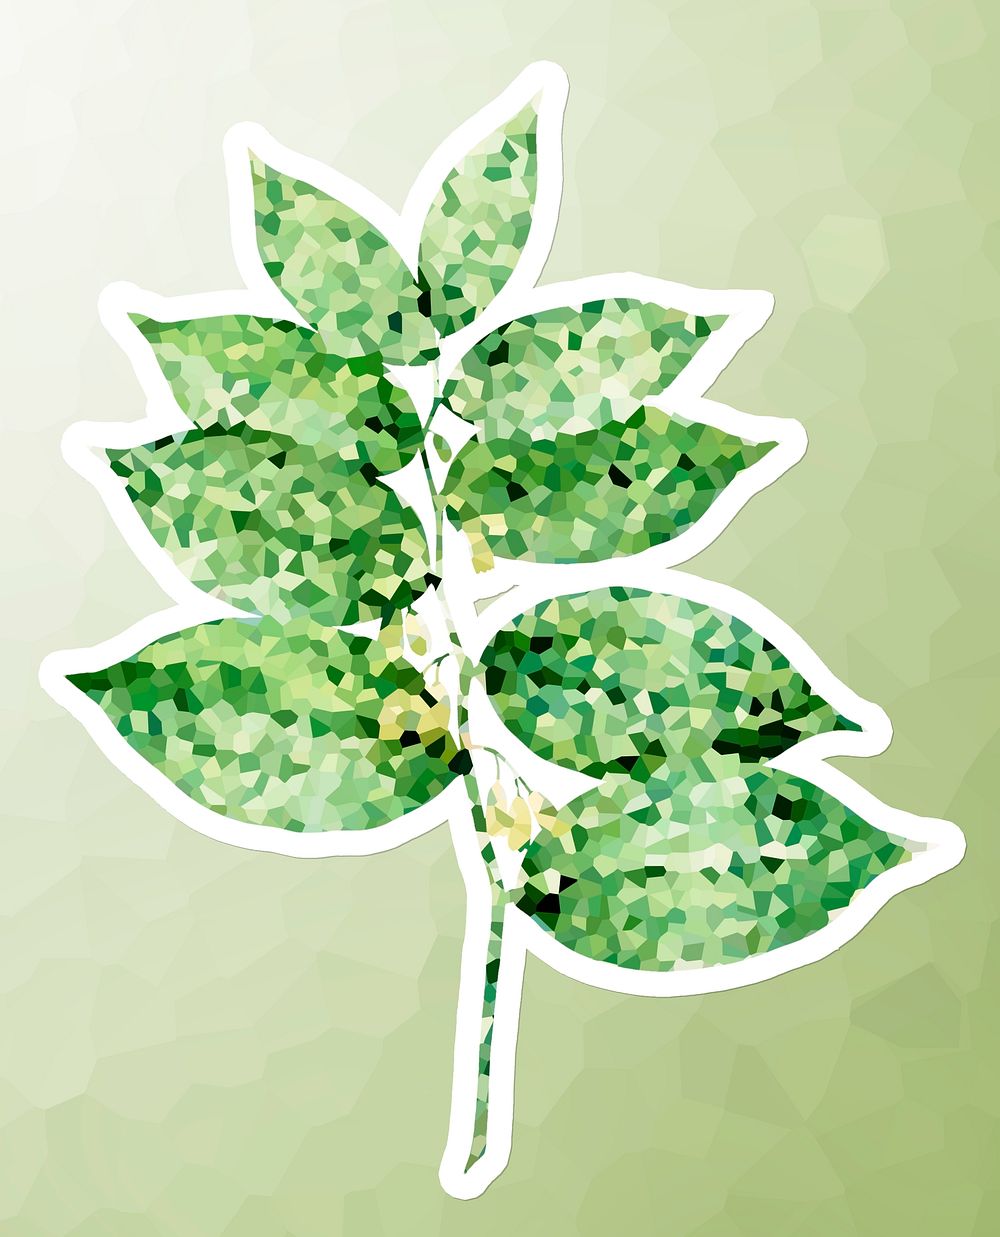 Crystallized polygonatum flower sticker overlay with a white border illustration